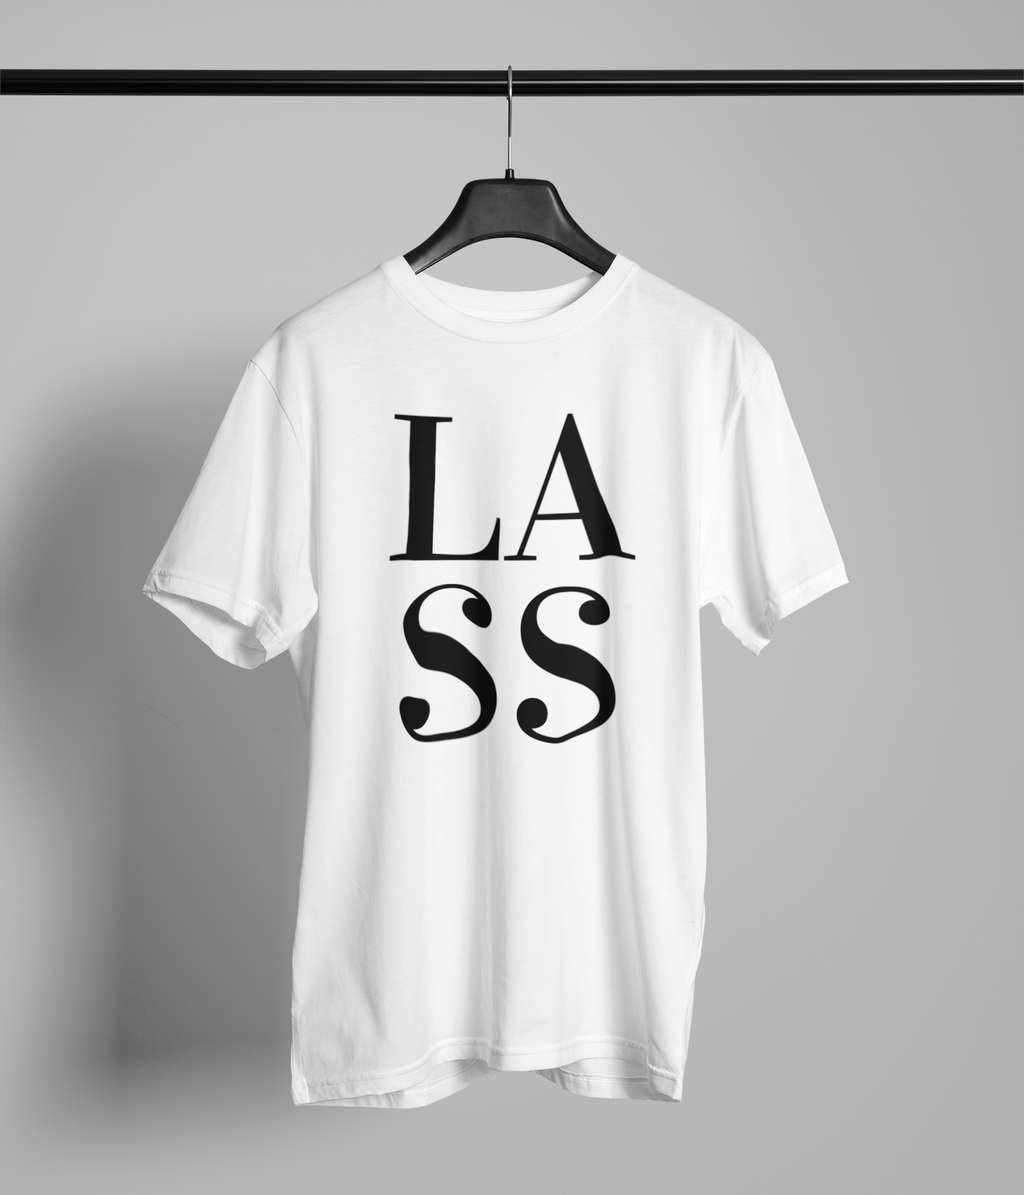 LASS Northern Slang T-Shirt Unisex